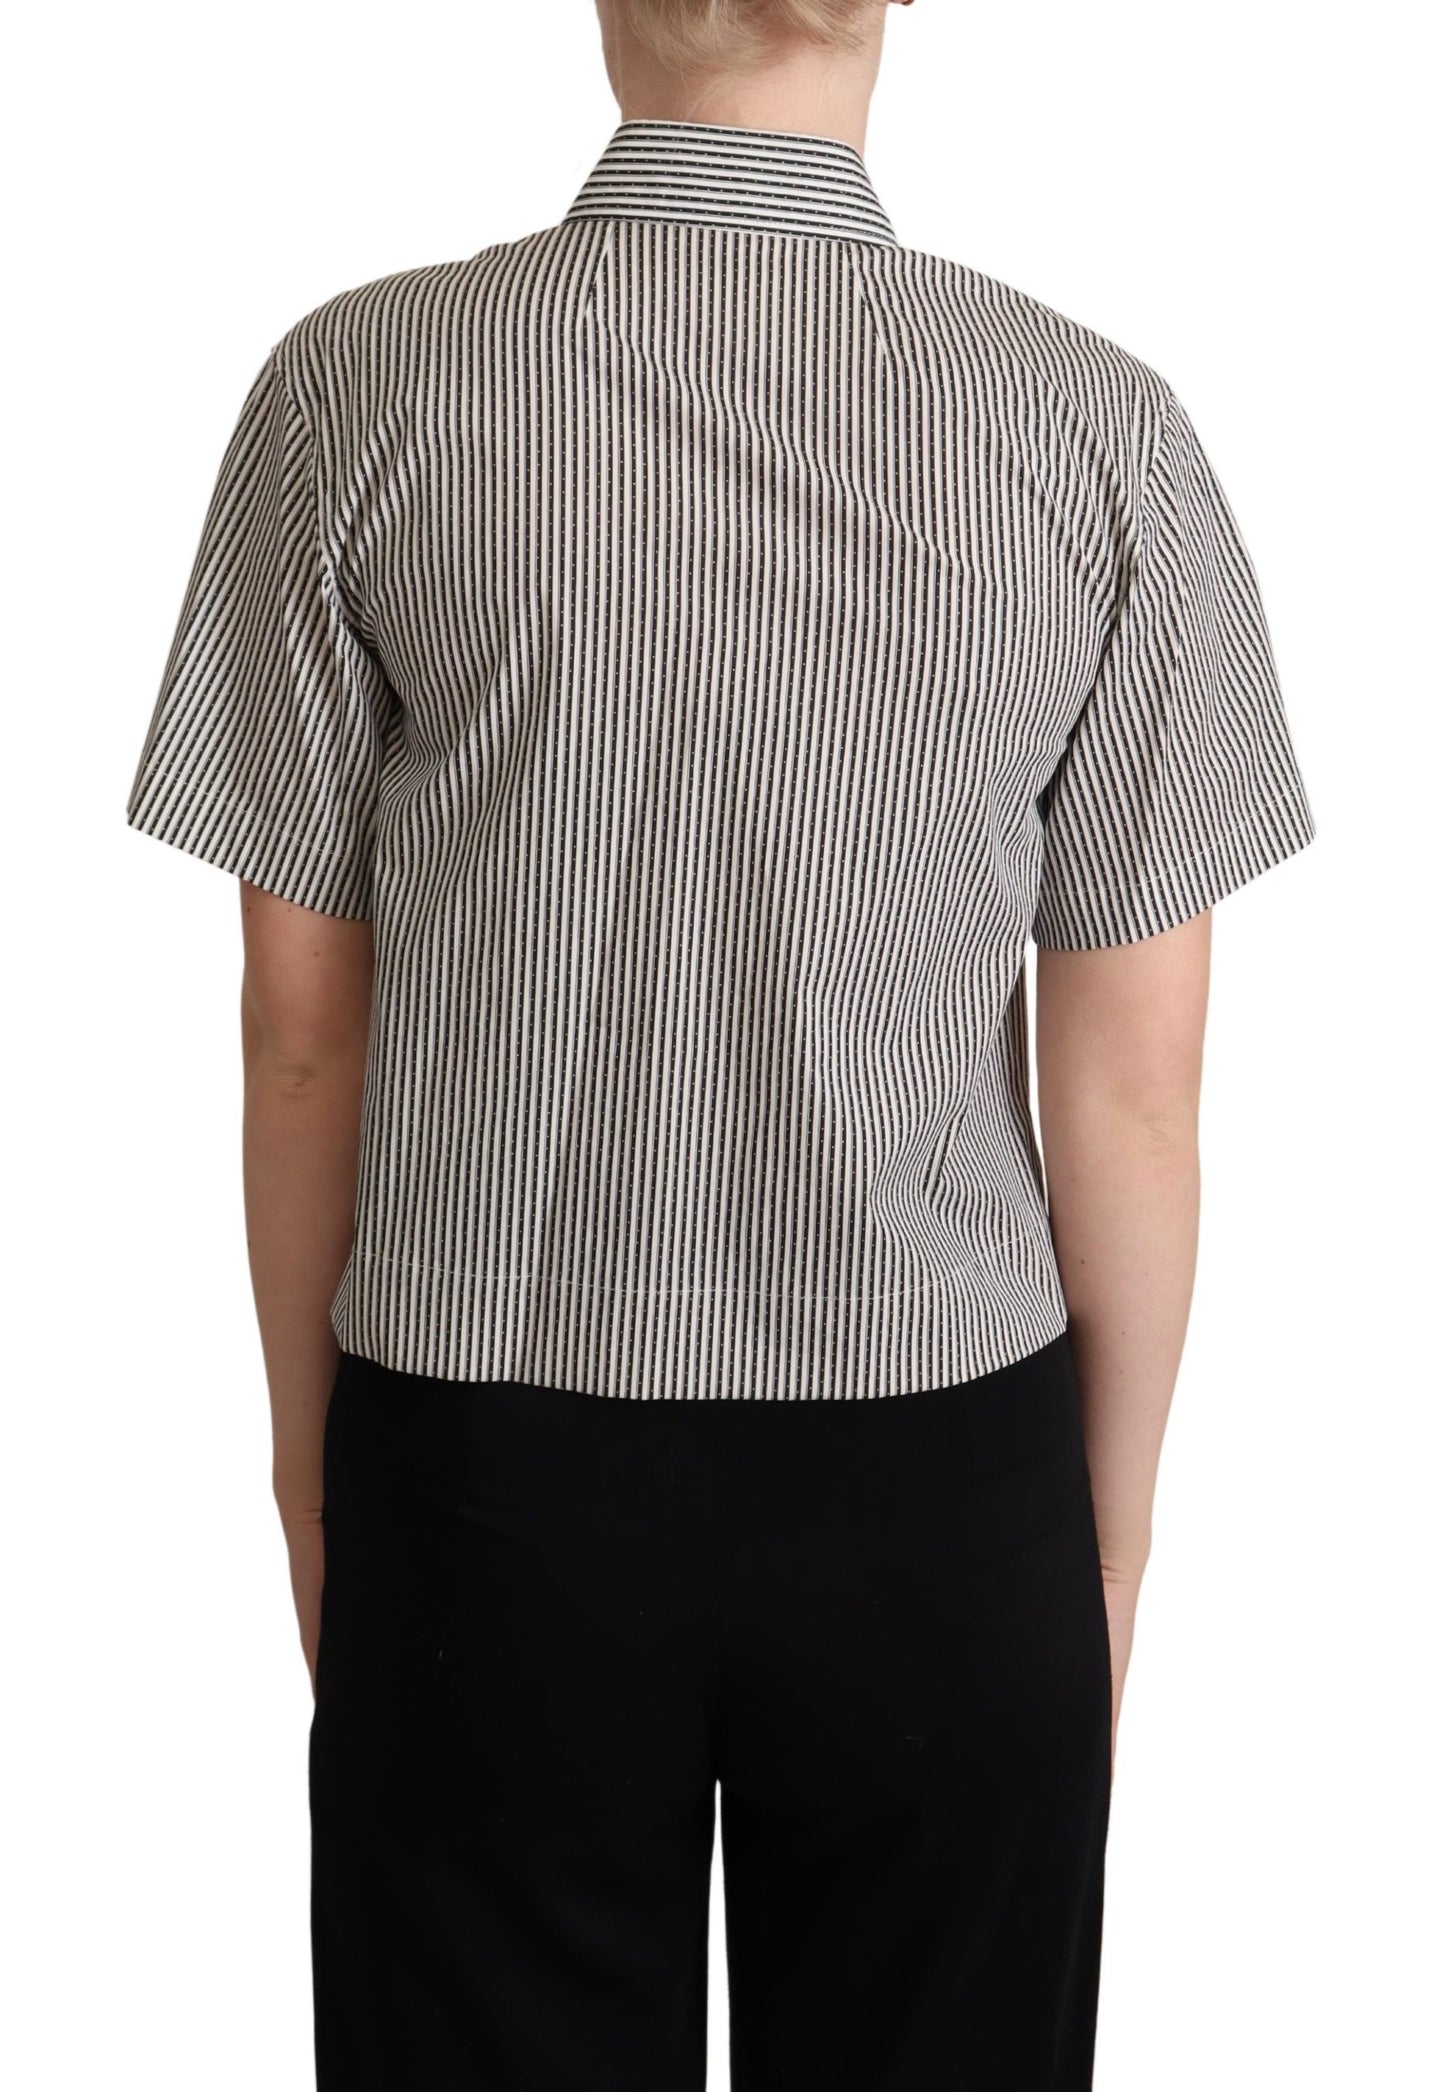 White Black Striped Cotton Shirt